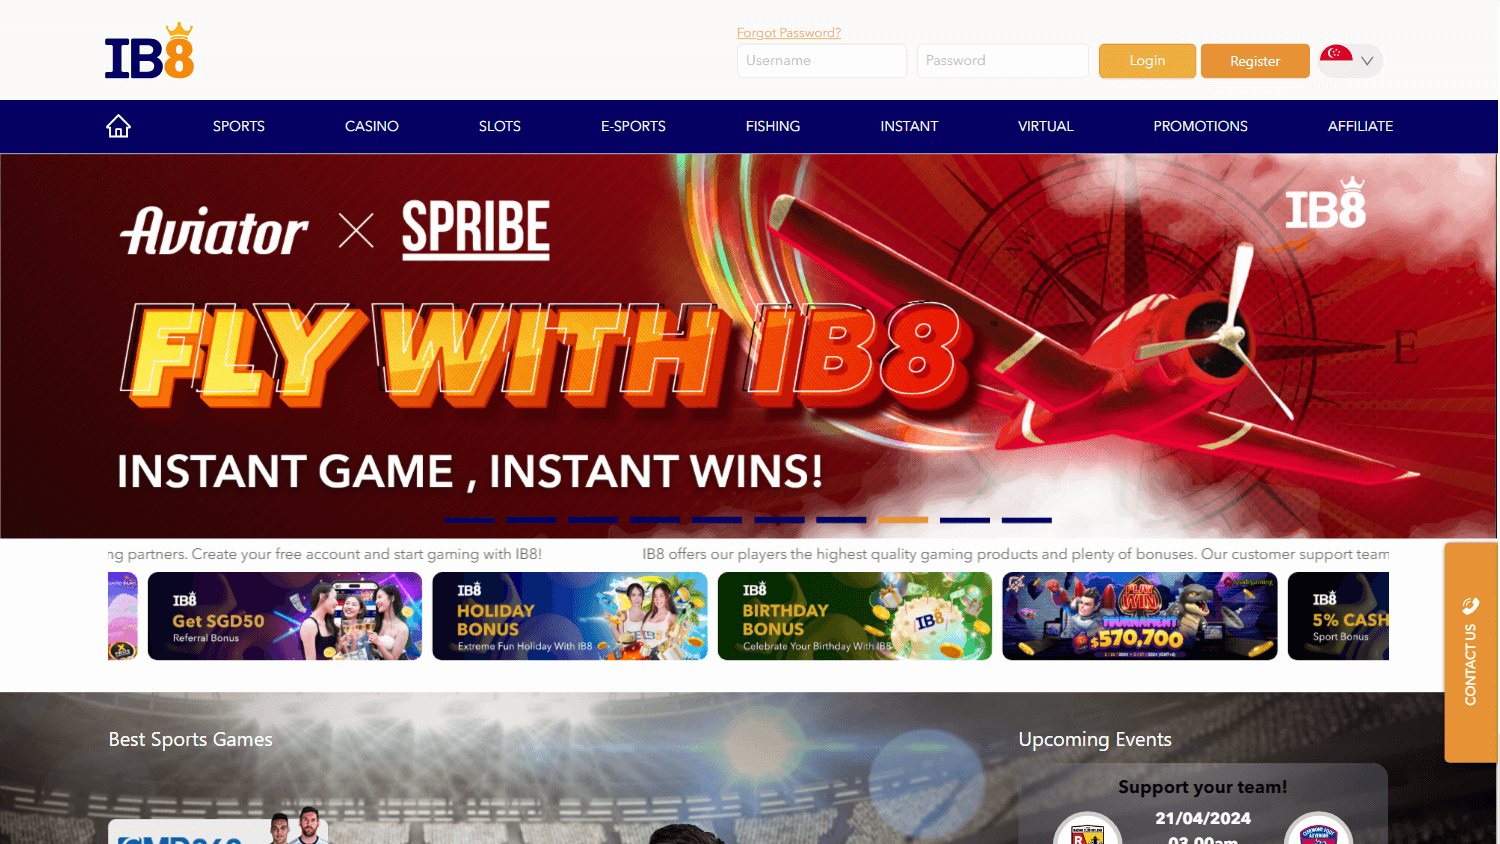 ib8_casino_homepage_desktop